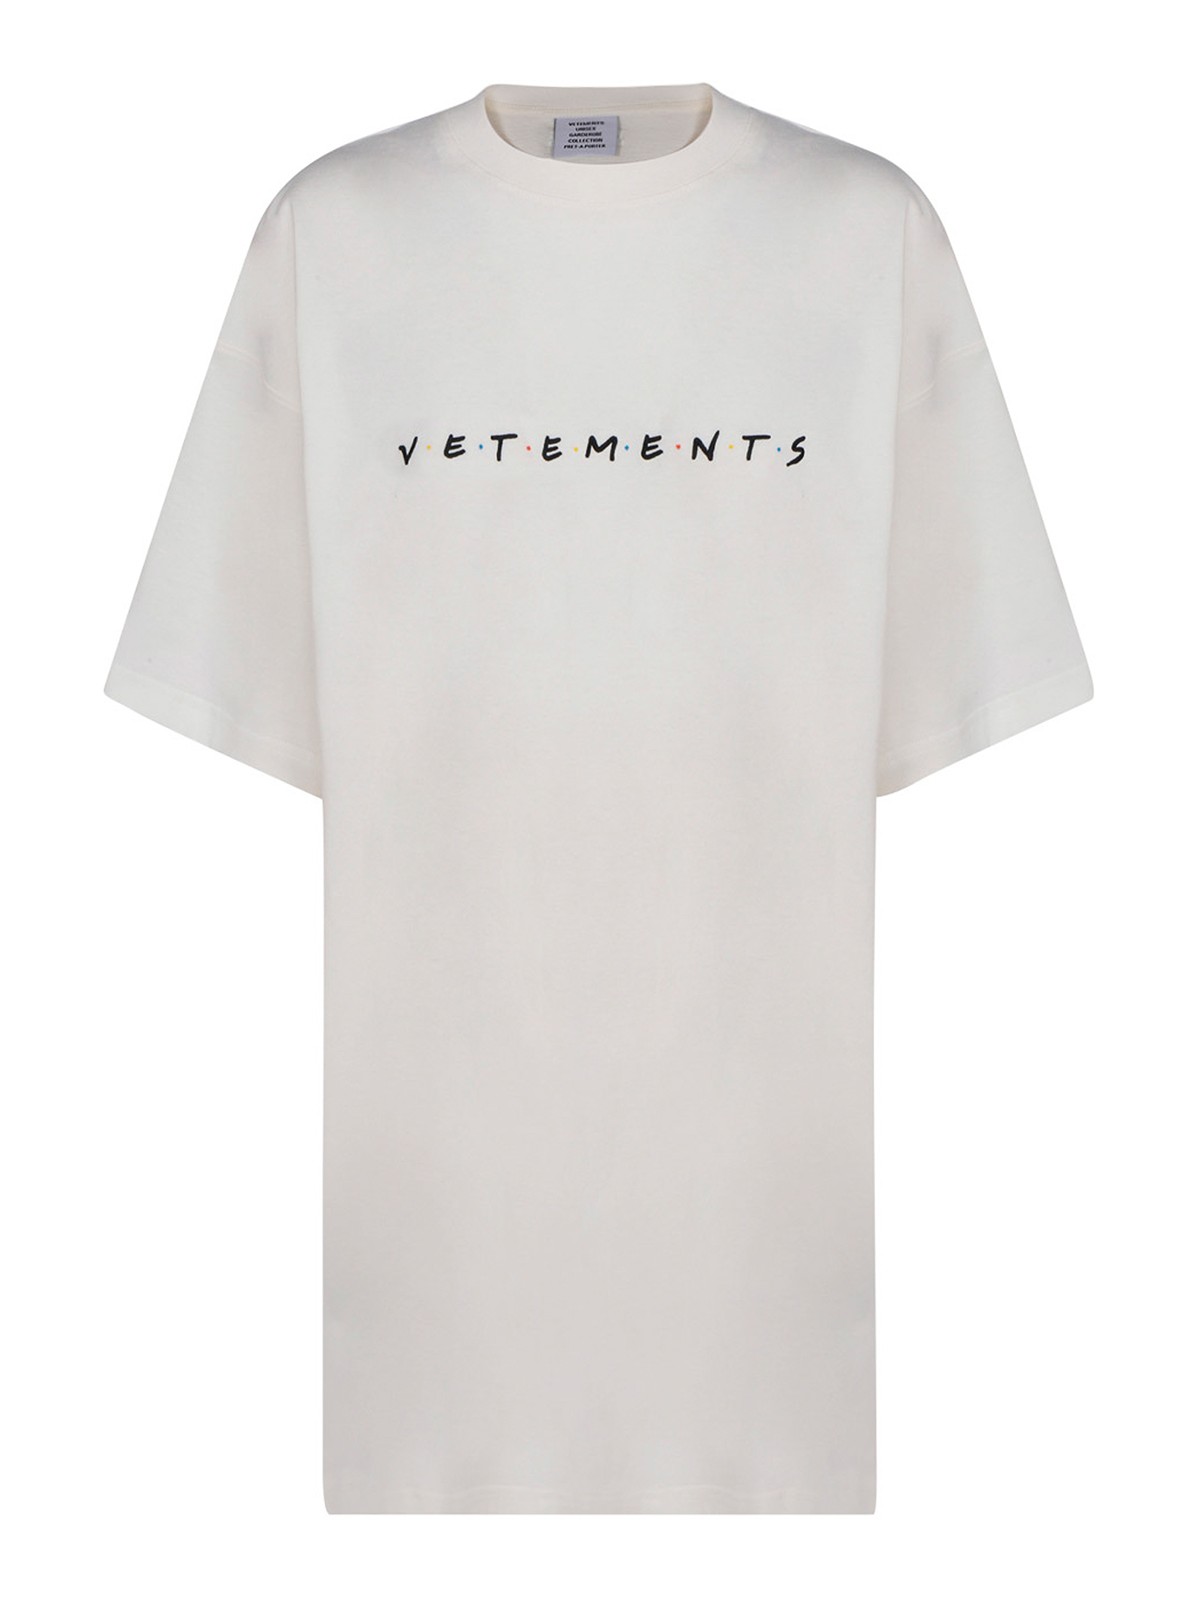 VETEMENTS T-shirts FRIEND STYLE LOGO T-SHIRT